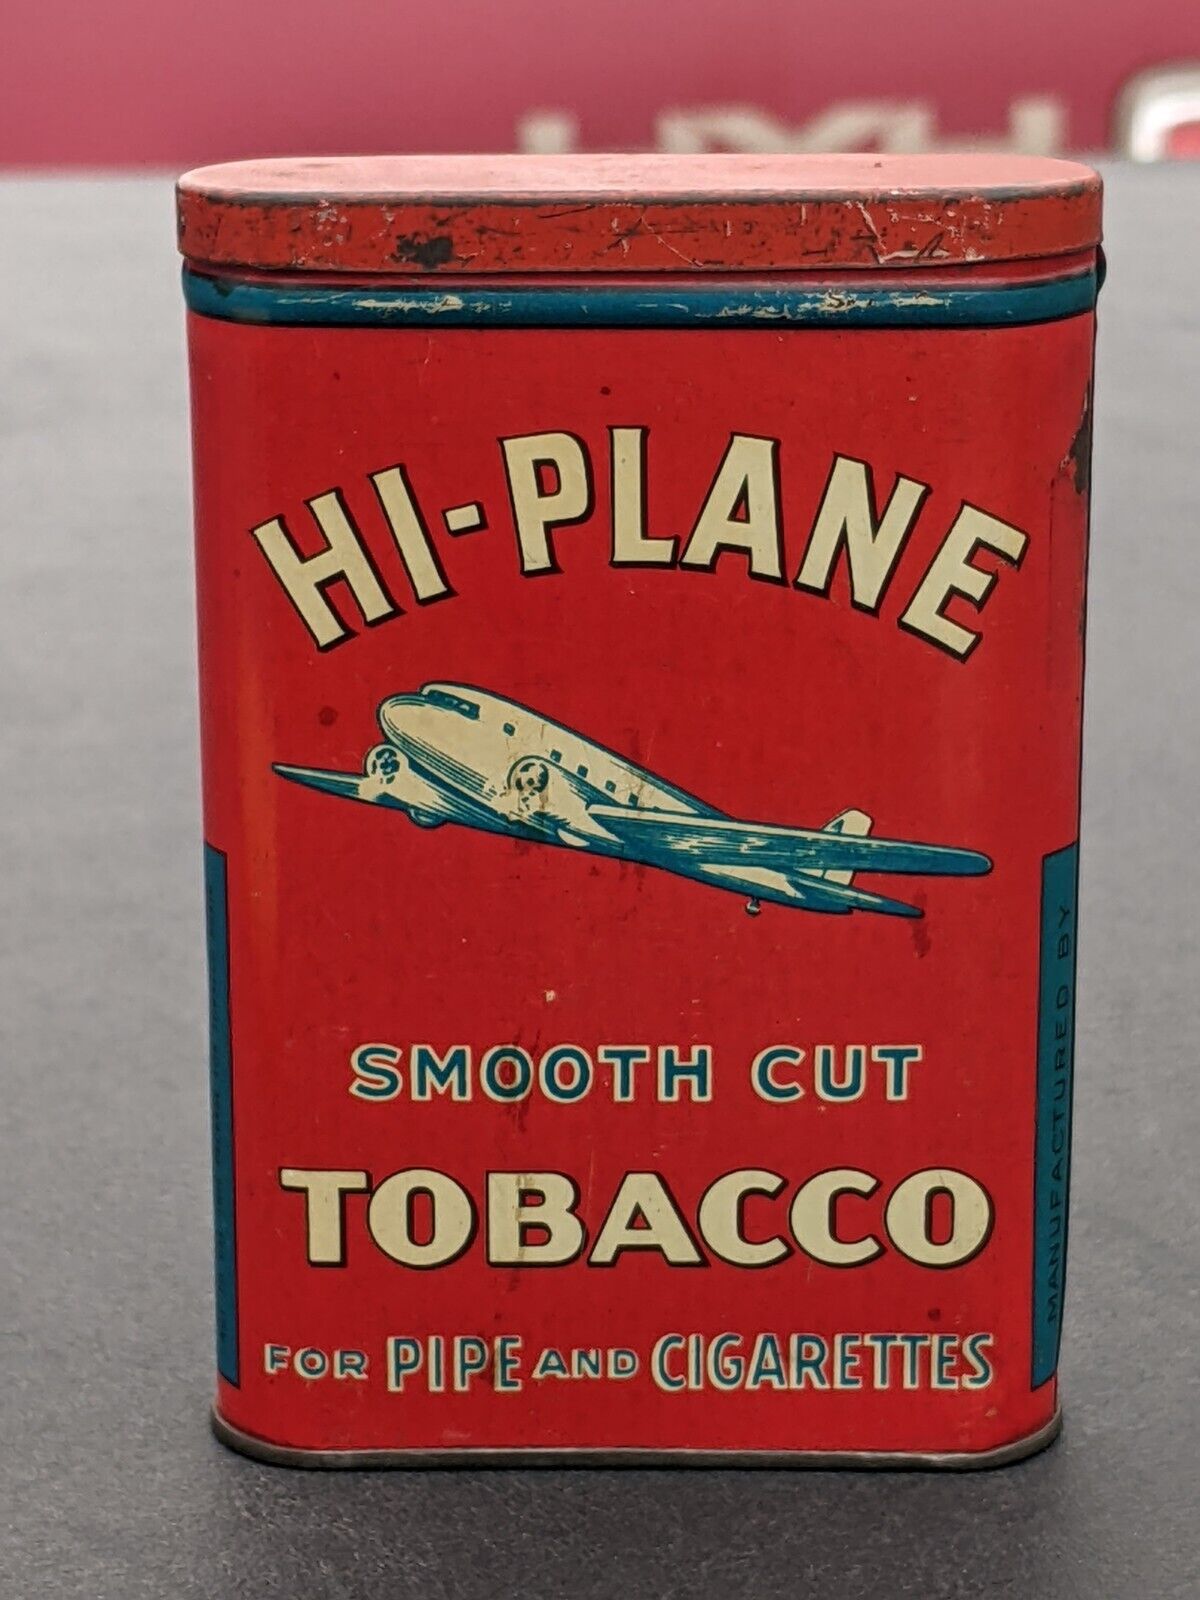 Hi plane pocket tobacco tin